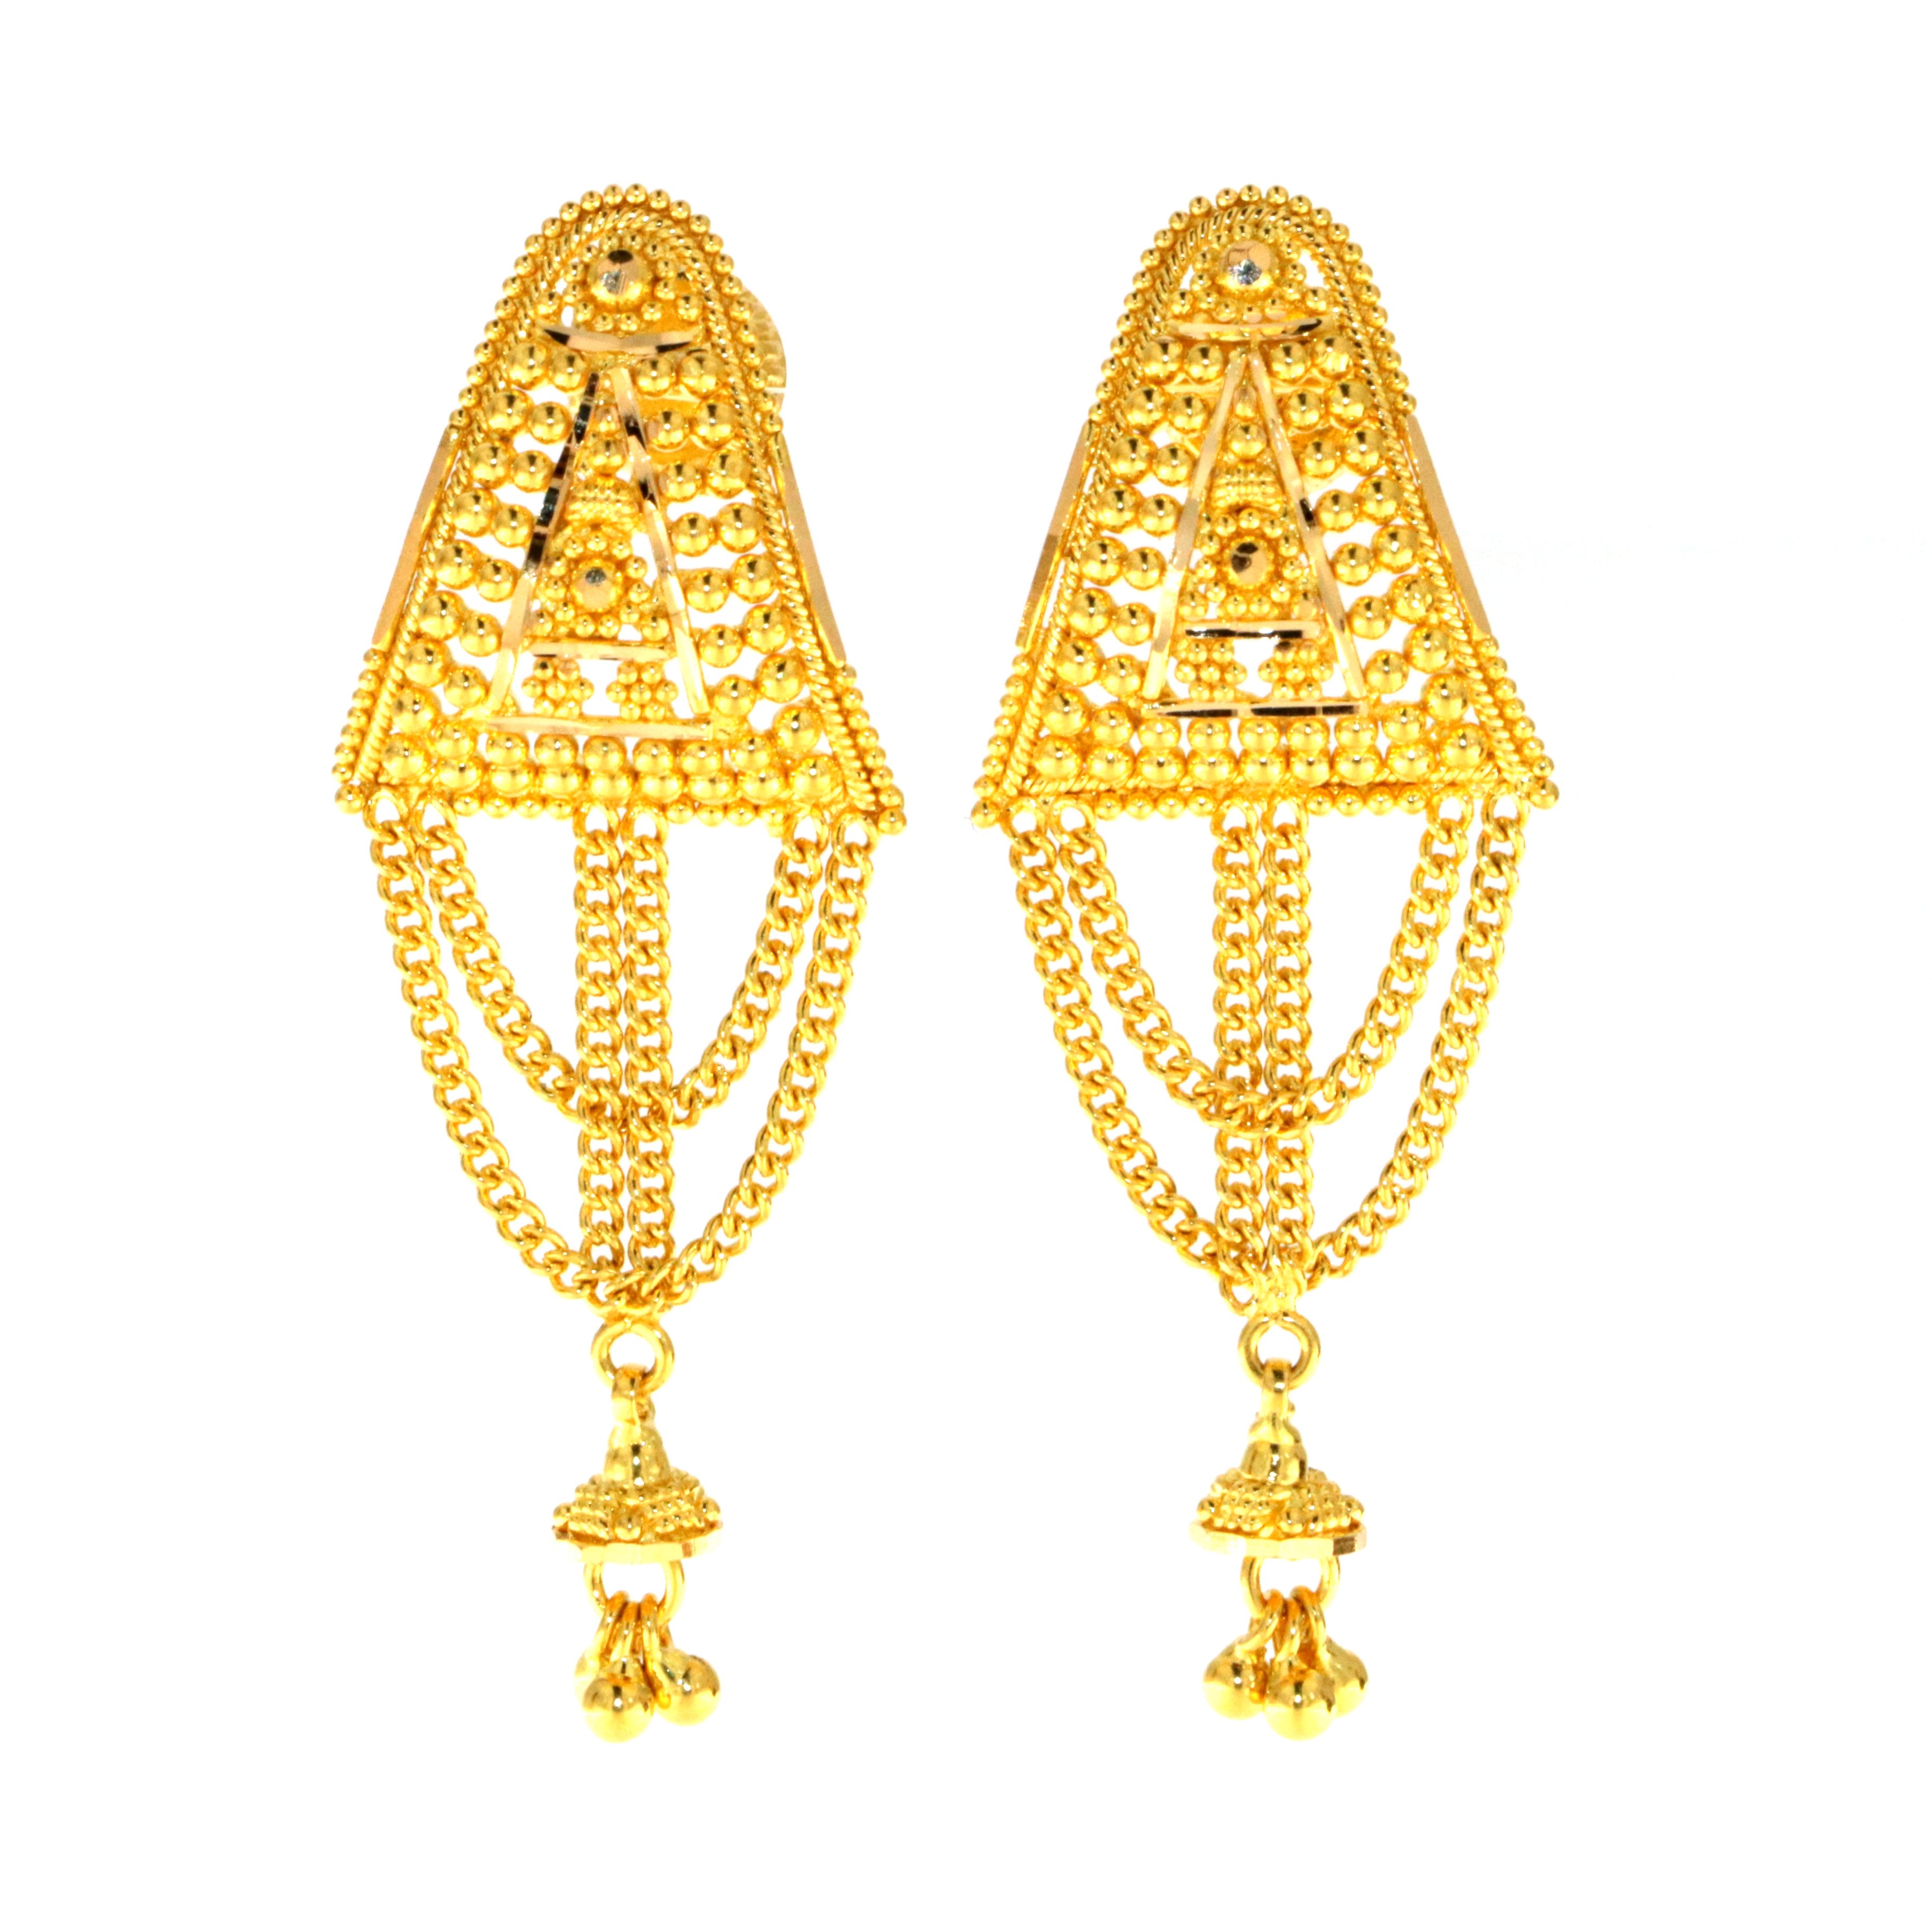 22ct Indian/Asian Gold Filigree Earrings Jhumkay | Earrings | Indian ...